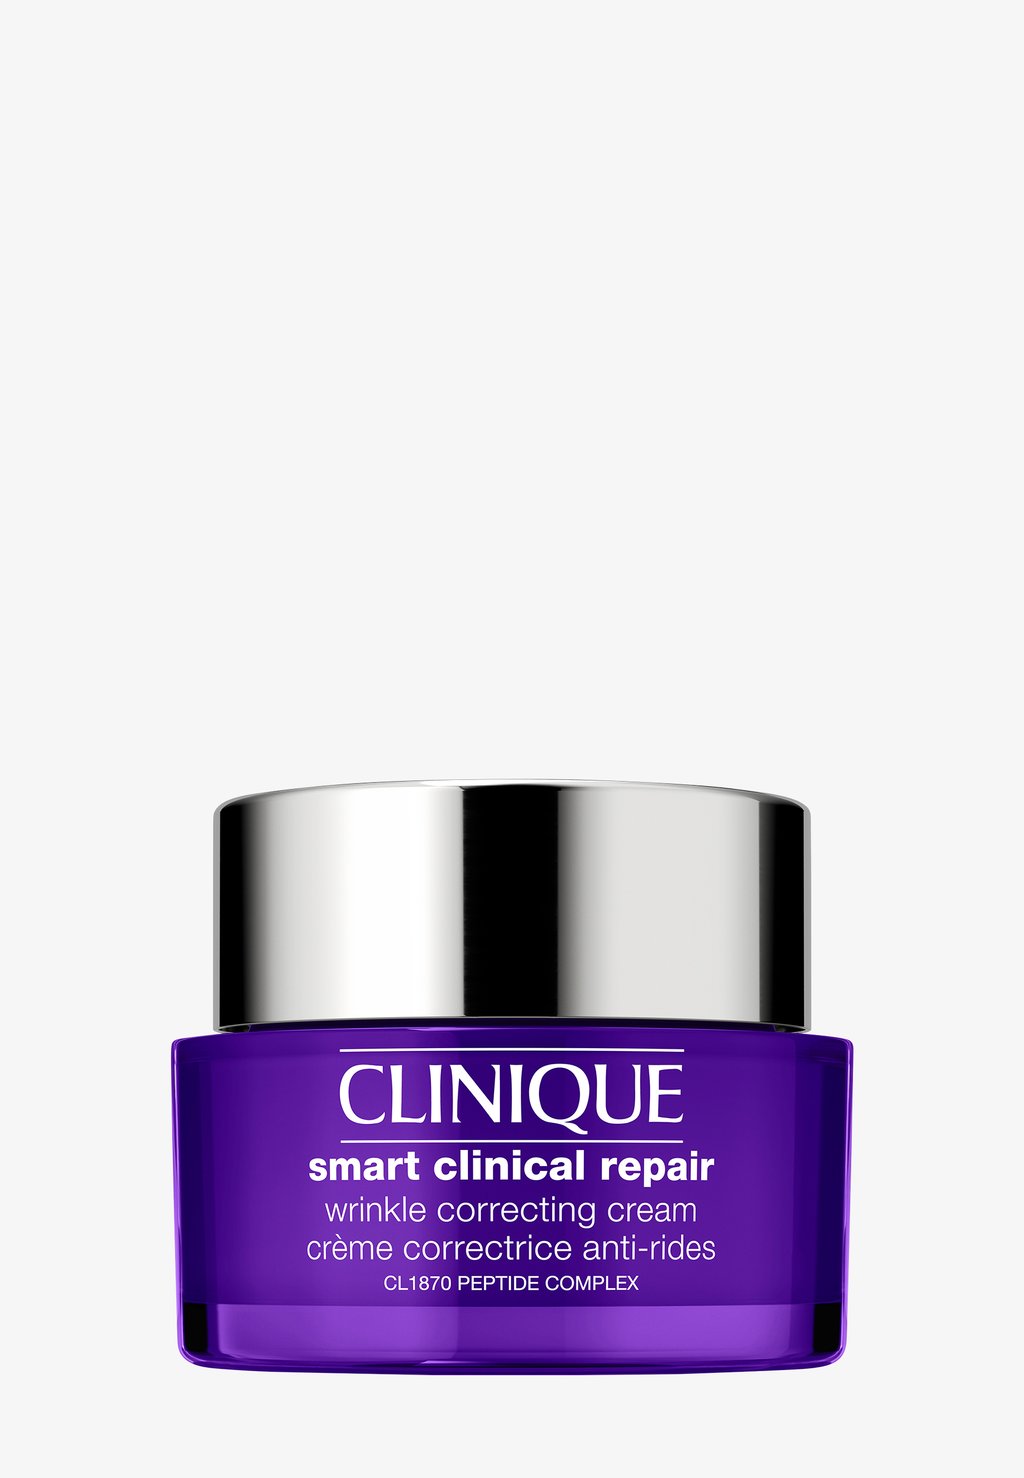 Дневной крем Smart Clinical Repair Wrinkle Correcting Cream Clinique